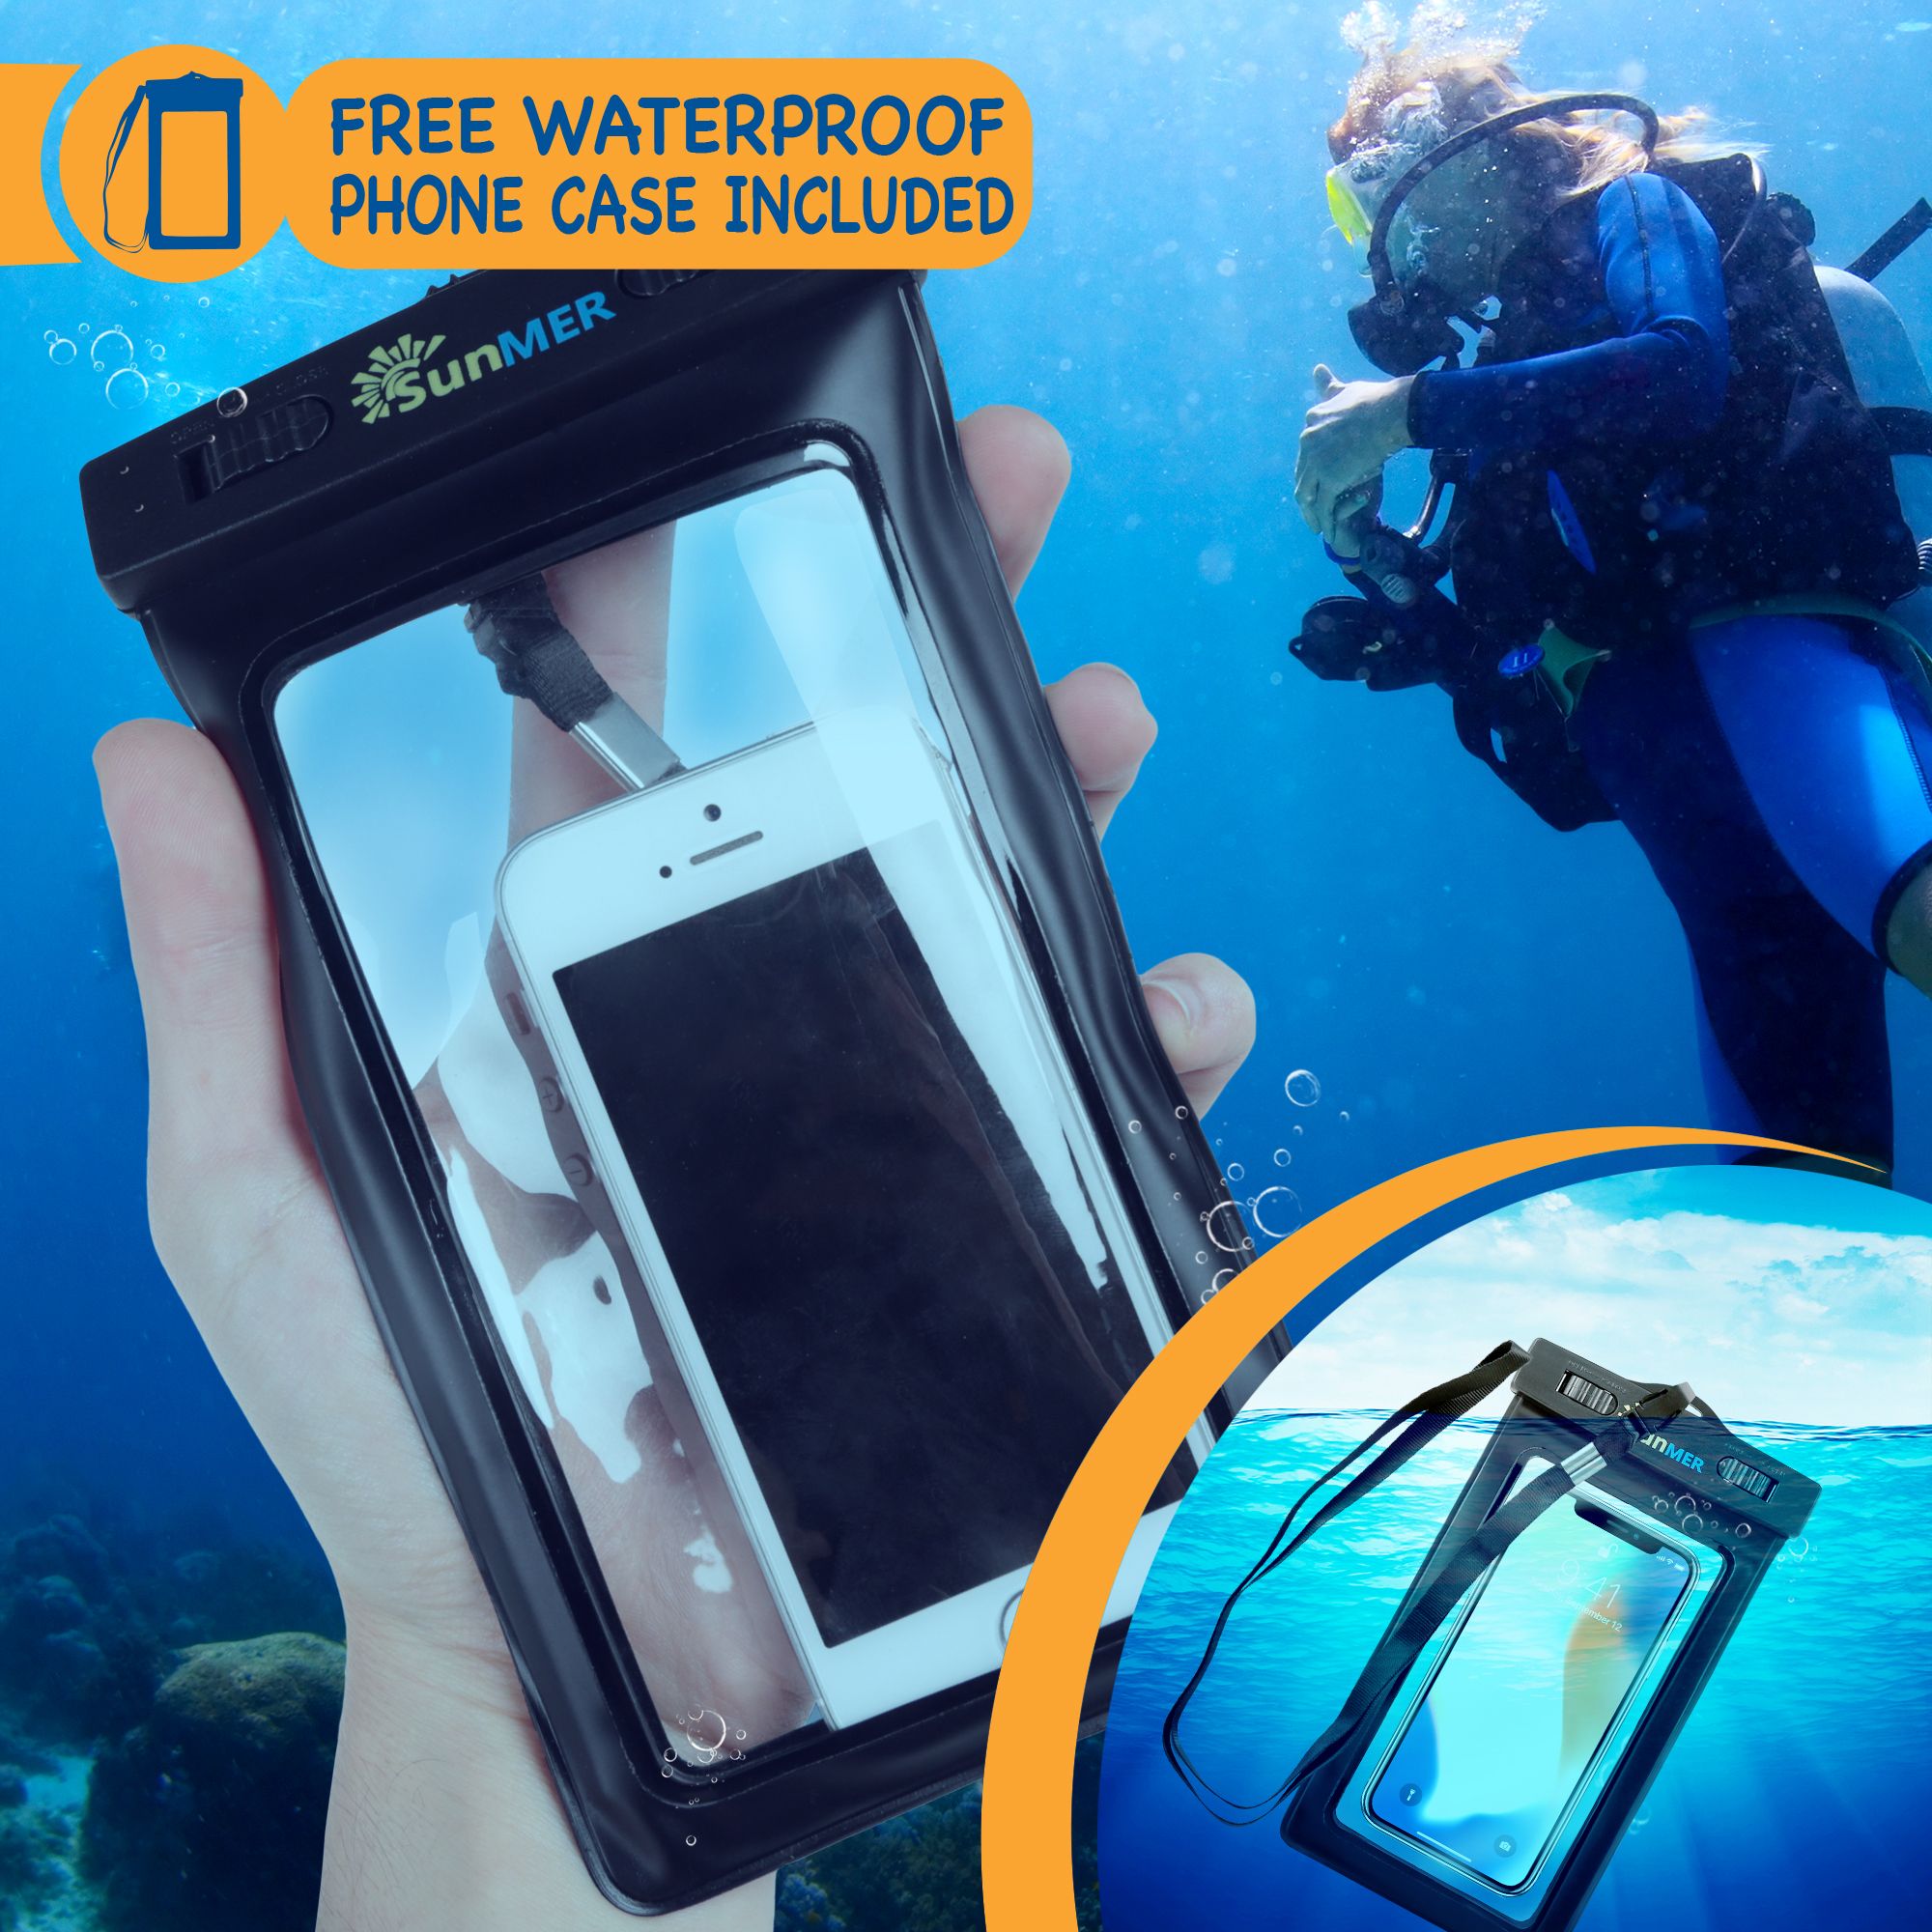 SUNMER 20L Dry Bag With Waterproof Phone Case - Black